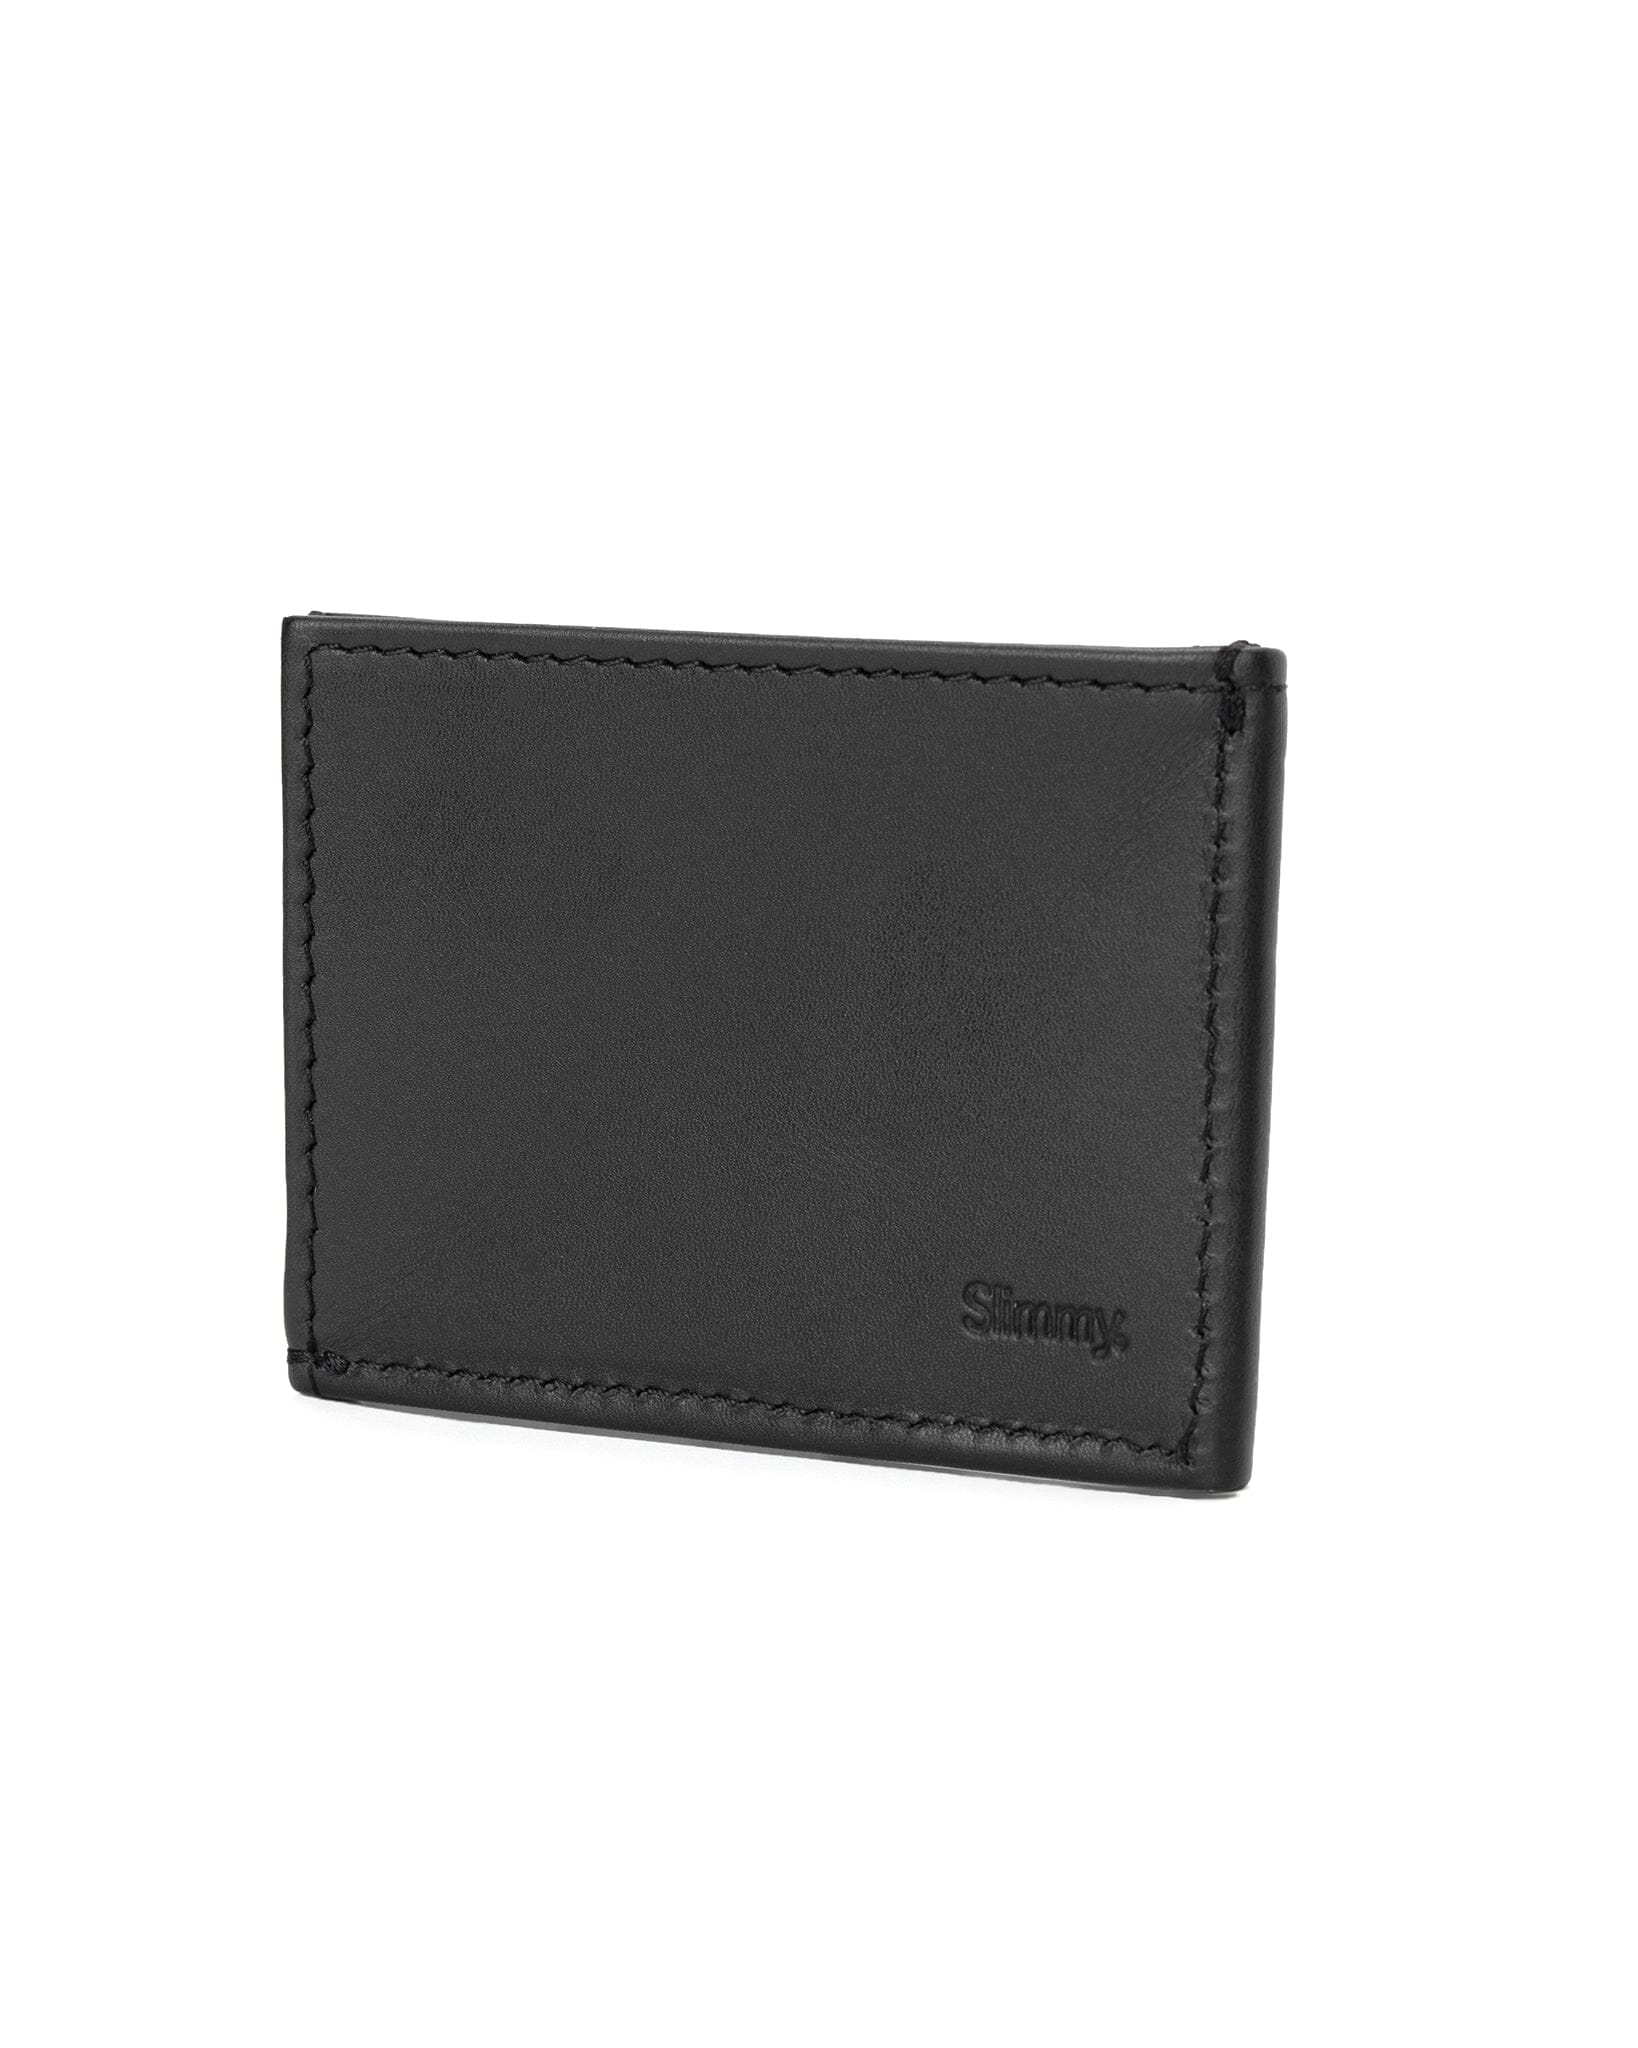 Slimmy OG 3-Pocket (76mm) Slim Minimalist Wallet - Black - RFID EDC